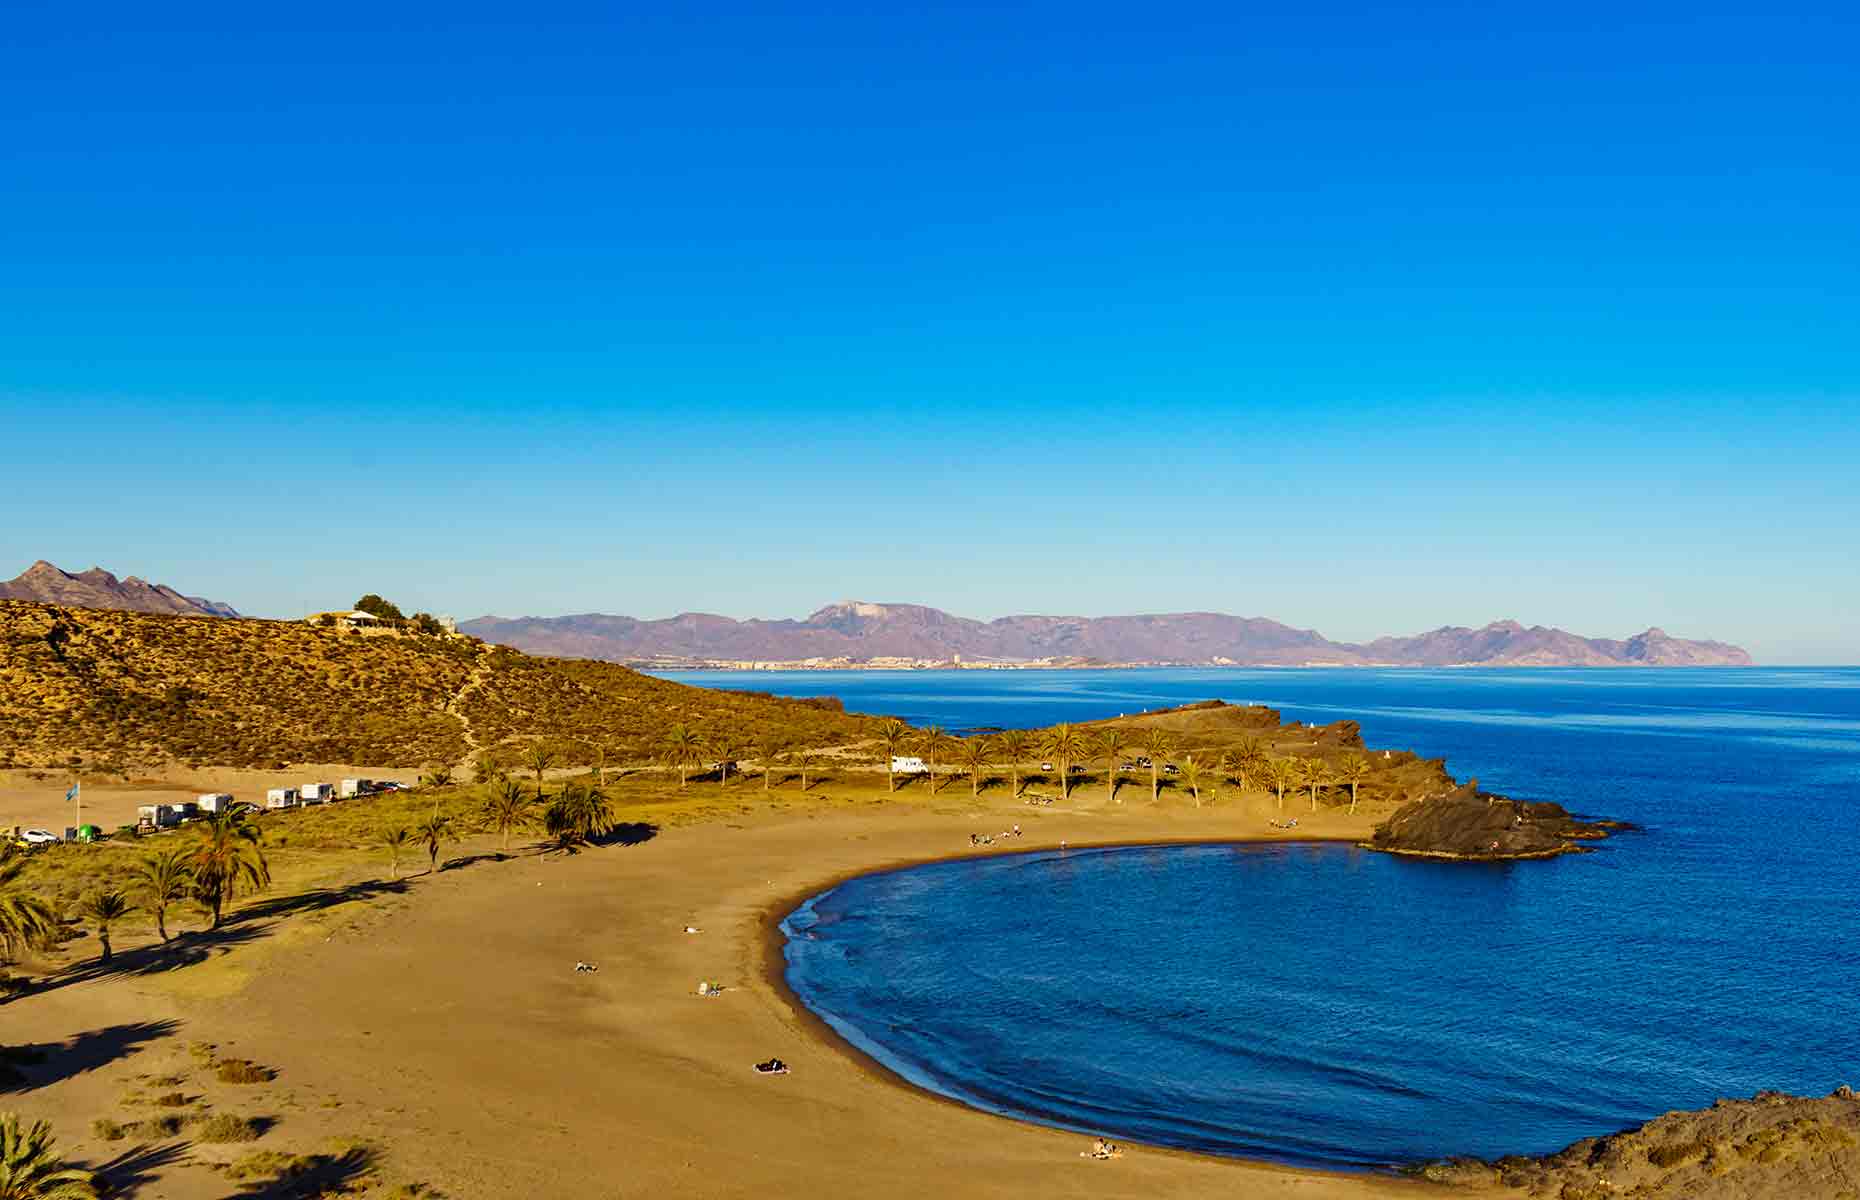 Playa de Percheles near Cañadas de Gallego, Mazarrón (Image: Voyagerix/Shutterstock)